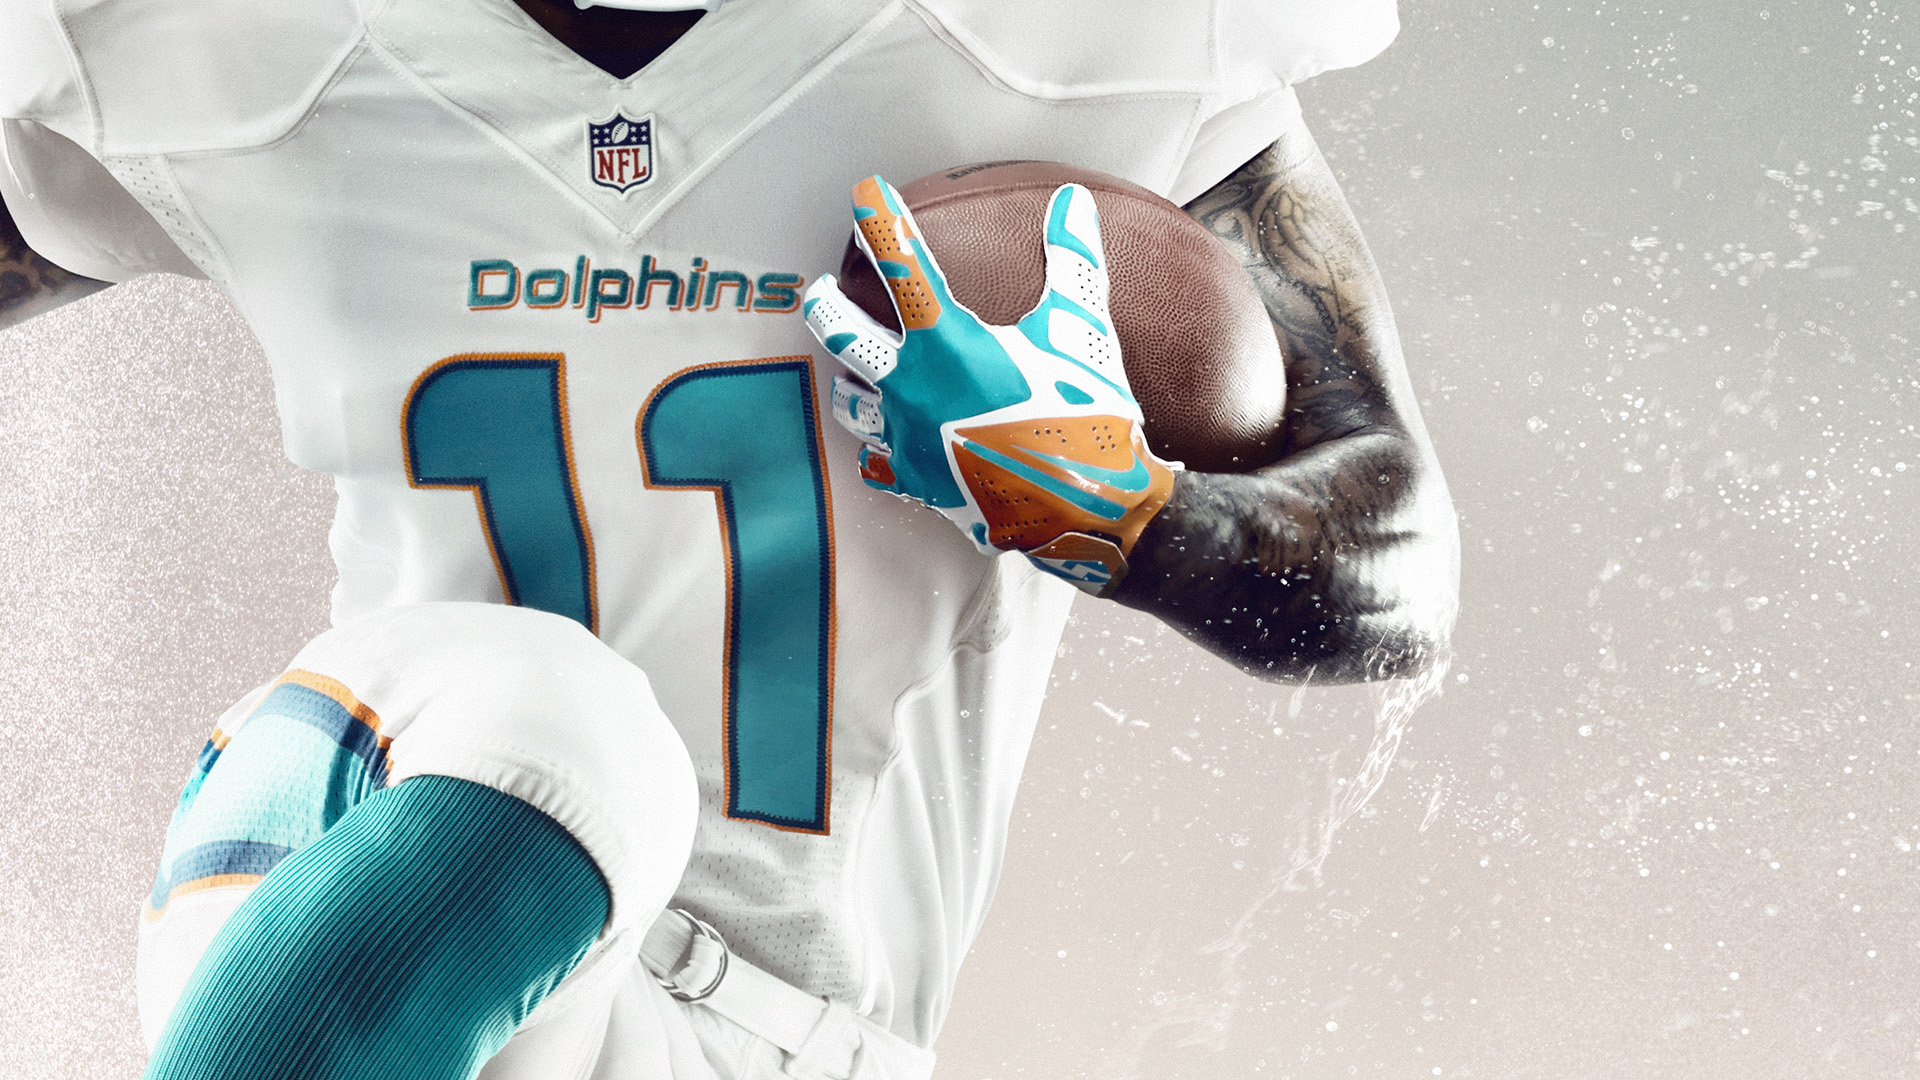 NFL Football Player Miami Dolphins wallpaper HD. Free desktop ...